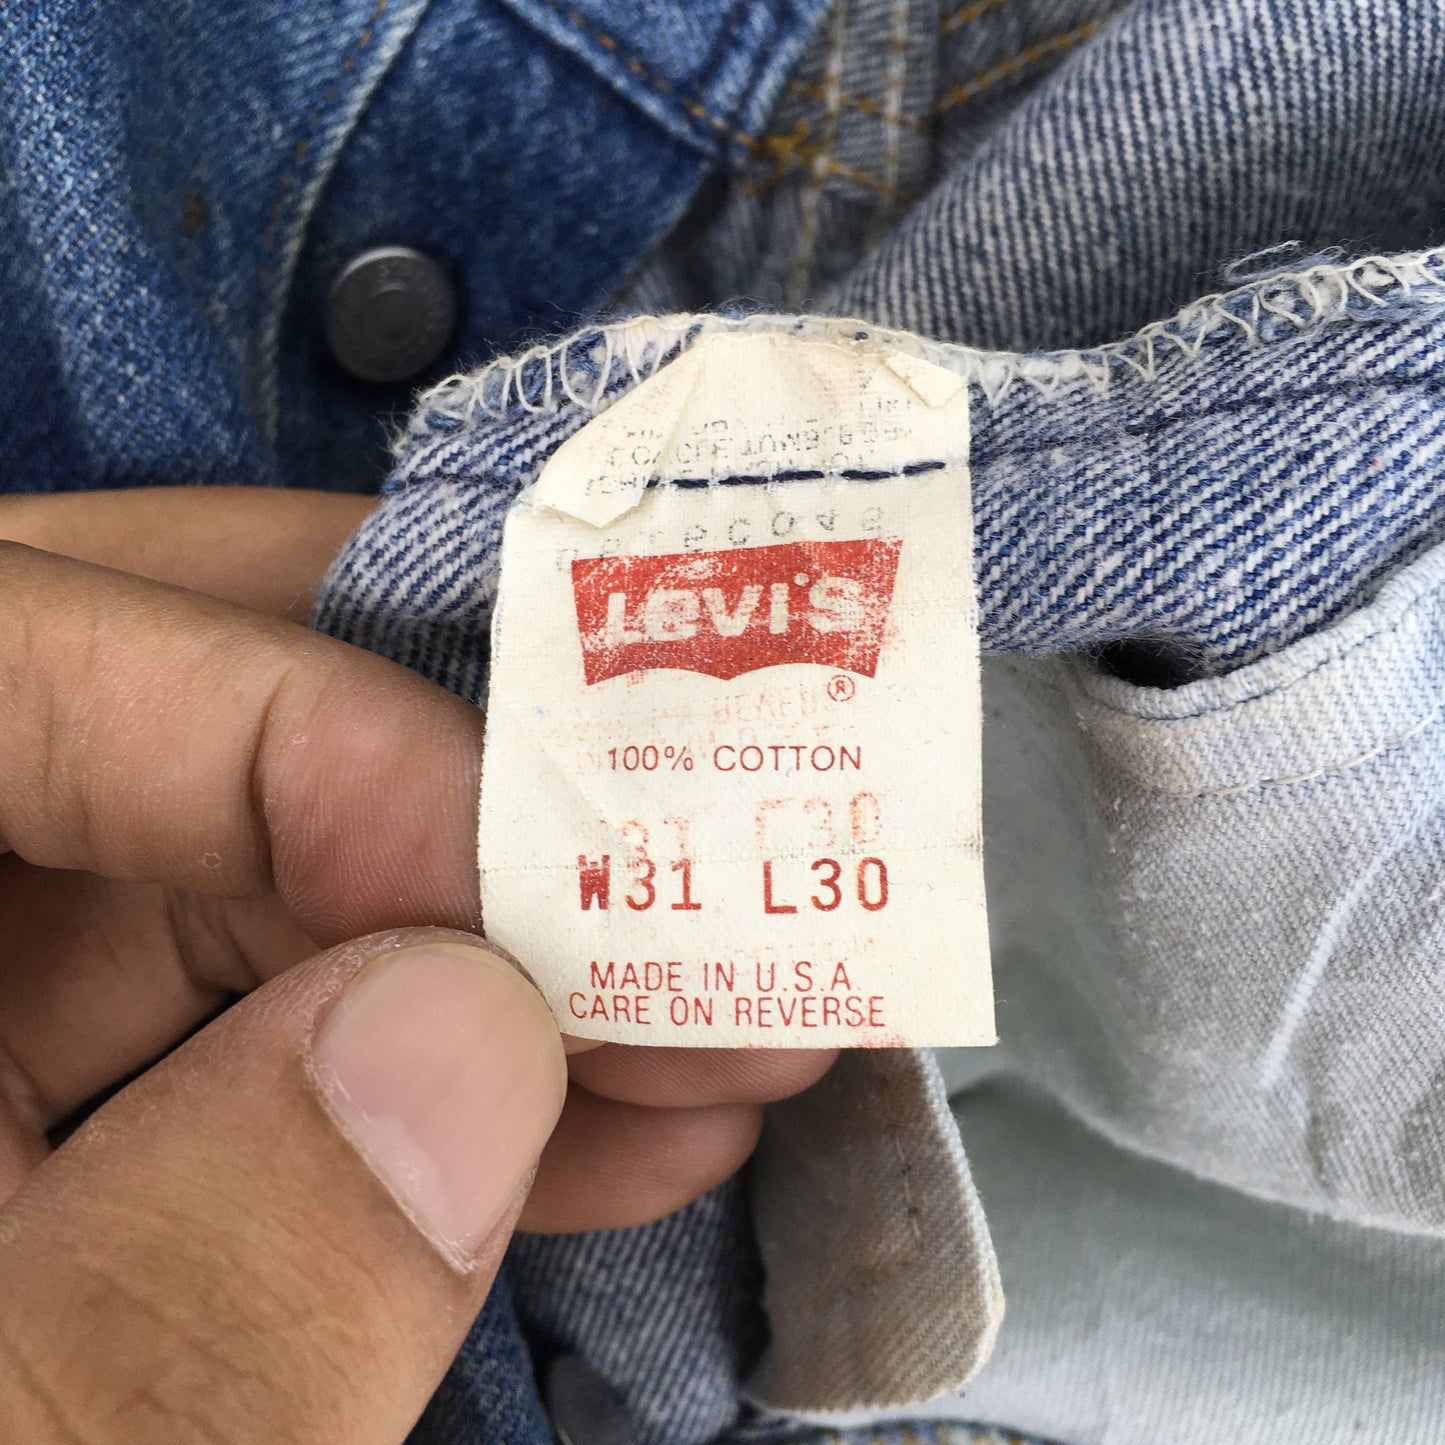 Levi's 501 Faded Dirty Stonewash Jeans Size 30x28